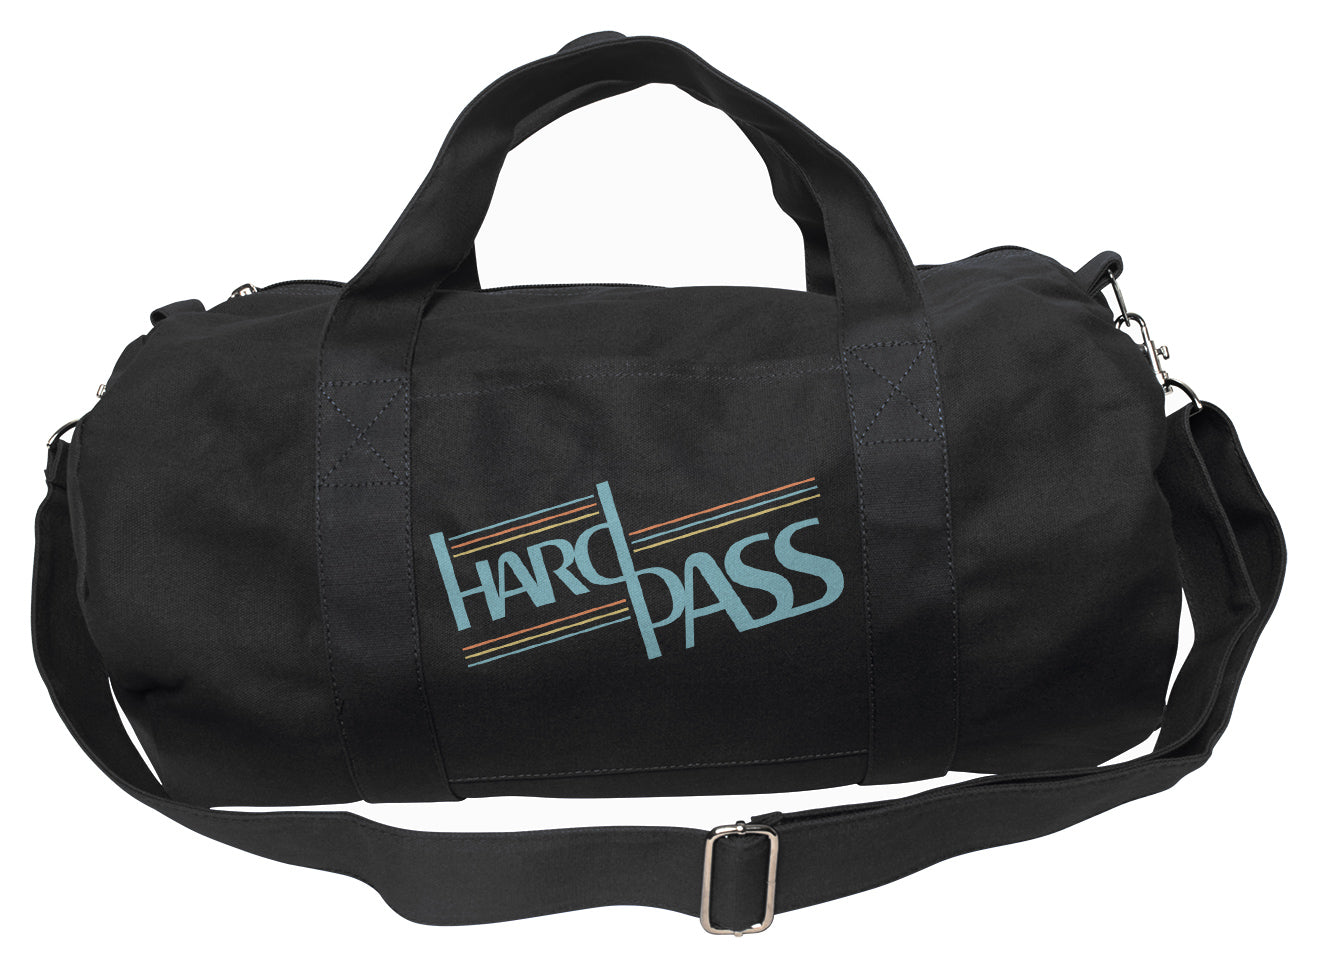 Hard Pass Duffel Bag